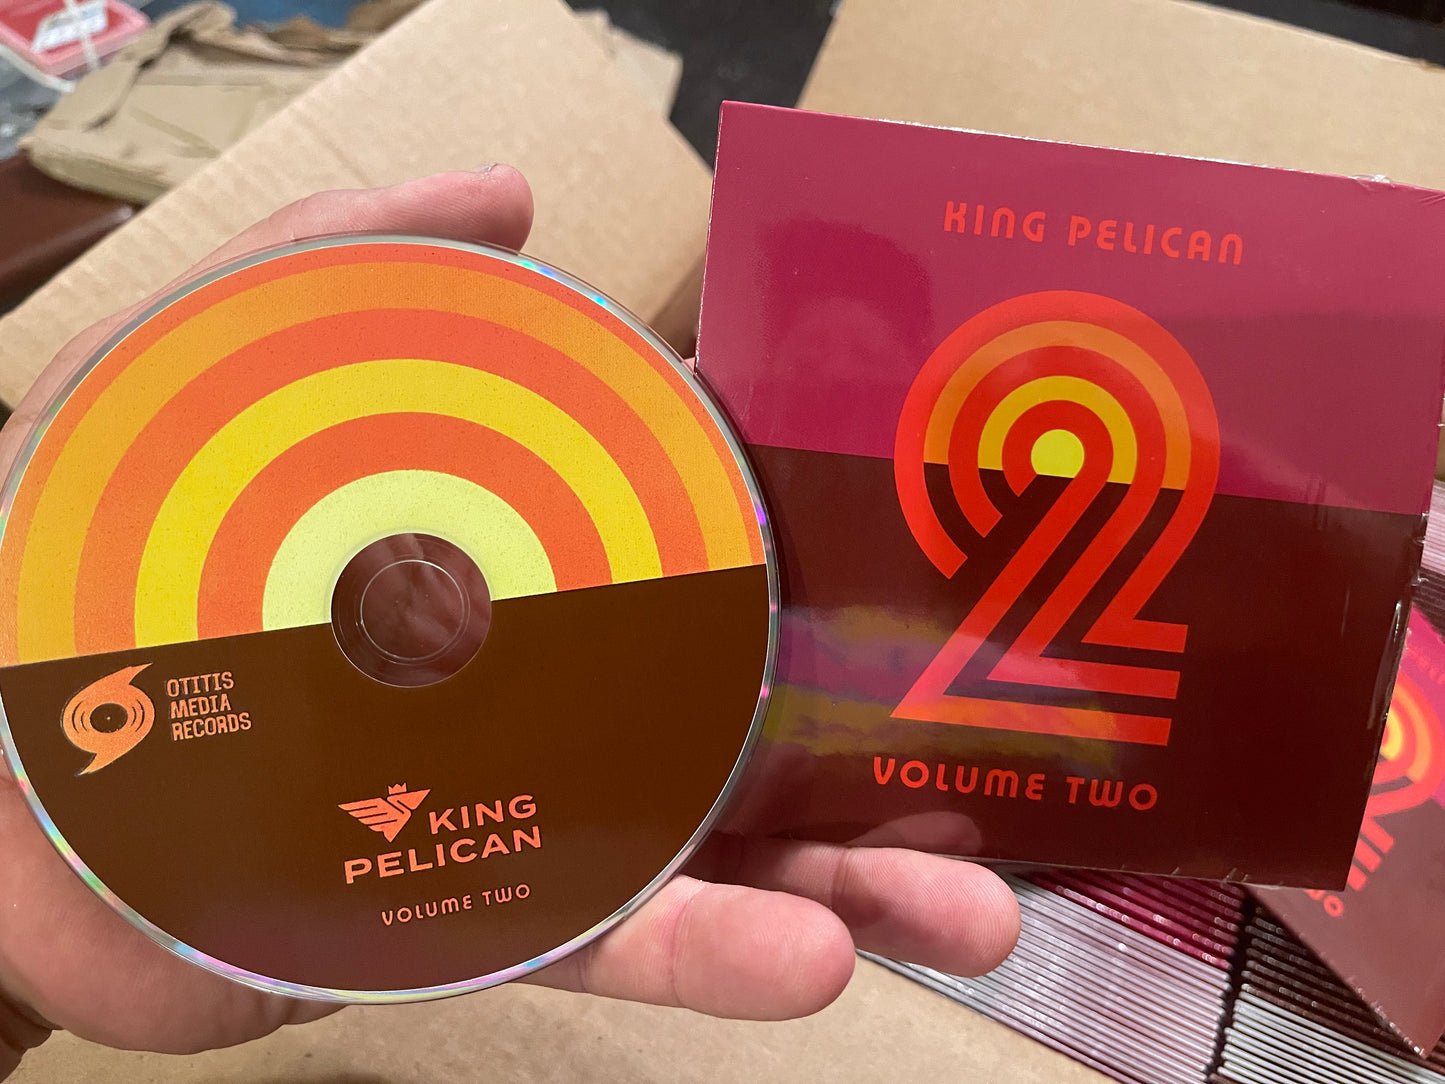 OMR-076 KING PELICAN “Volume 2” CD/LP/WAX MAGE